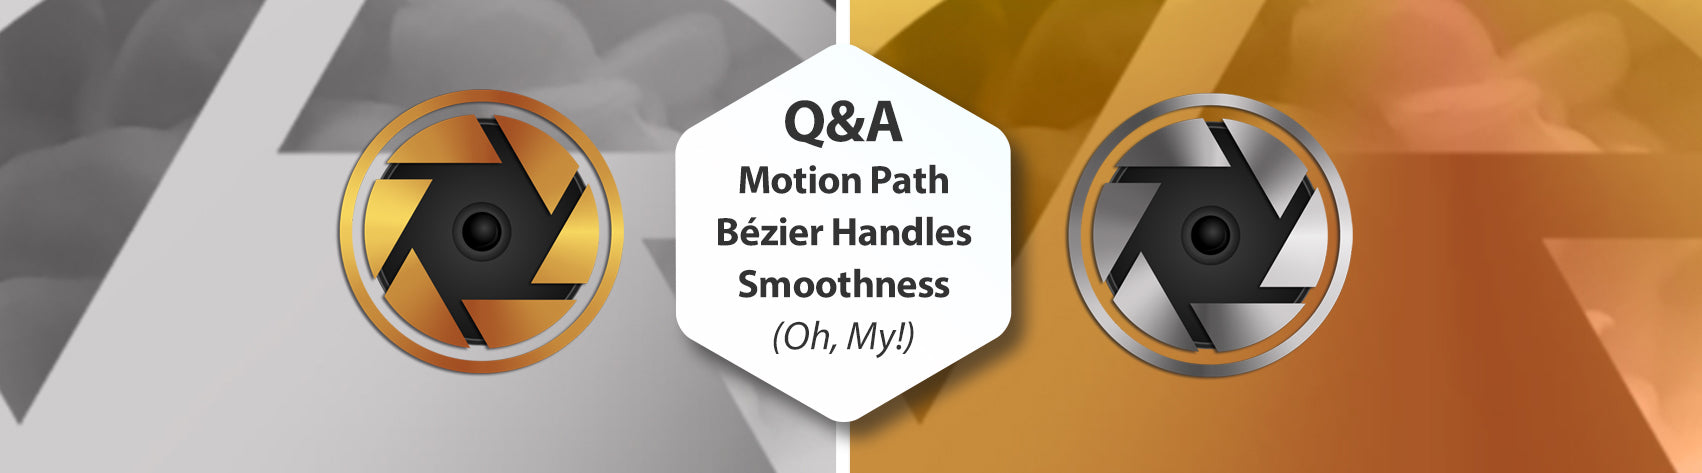 Q&A - Motion Path, Bézier Handles, Smoothness (Oh, My!)